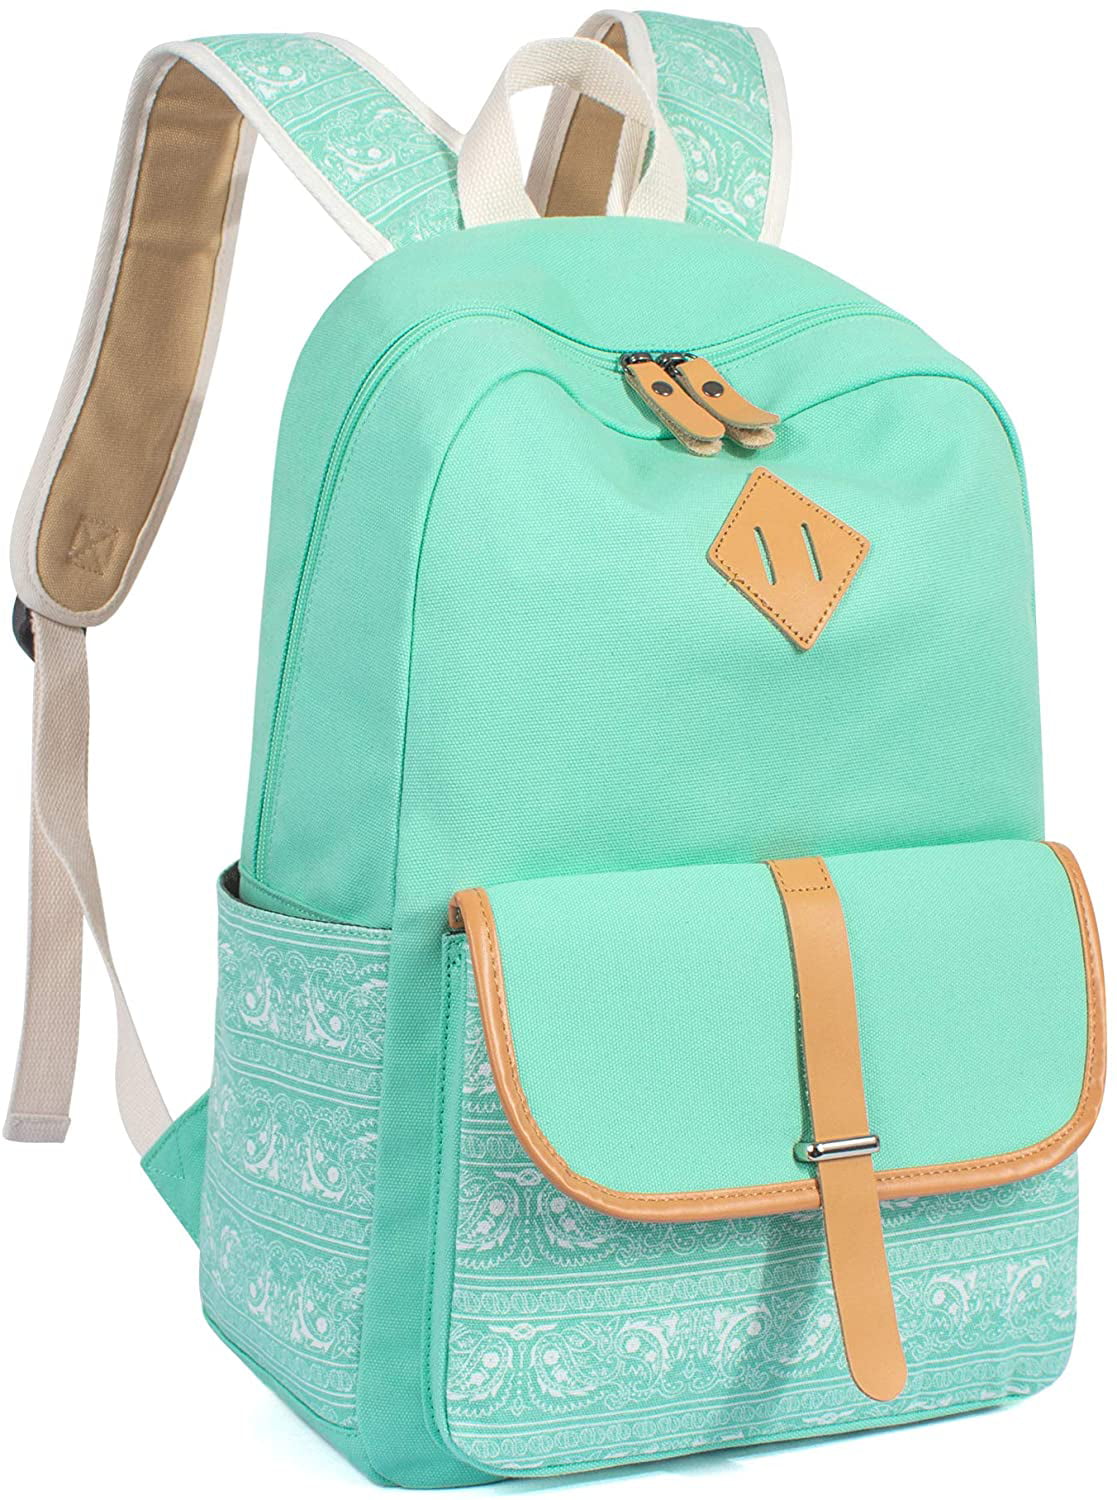 Leaper Cute Canvas Backpack for Girls School Bag Travel Daypack Water Blue 8812 | Walmart Canada